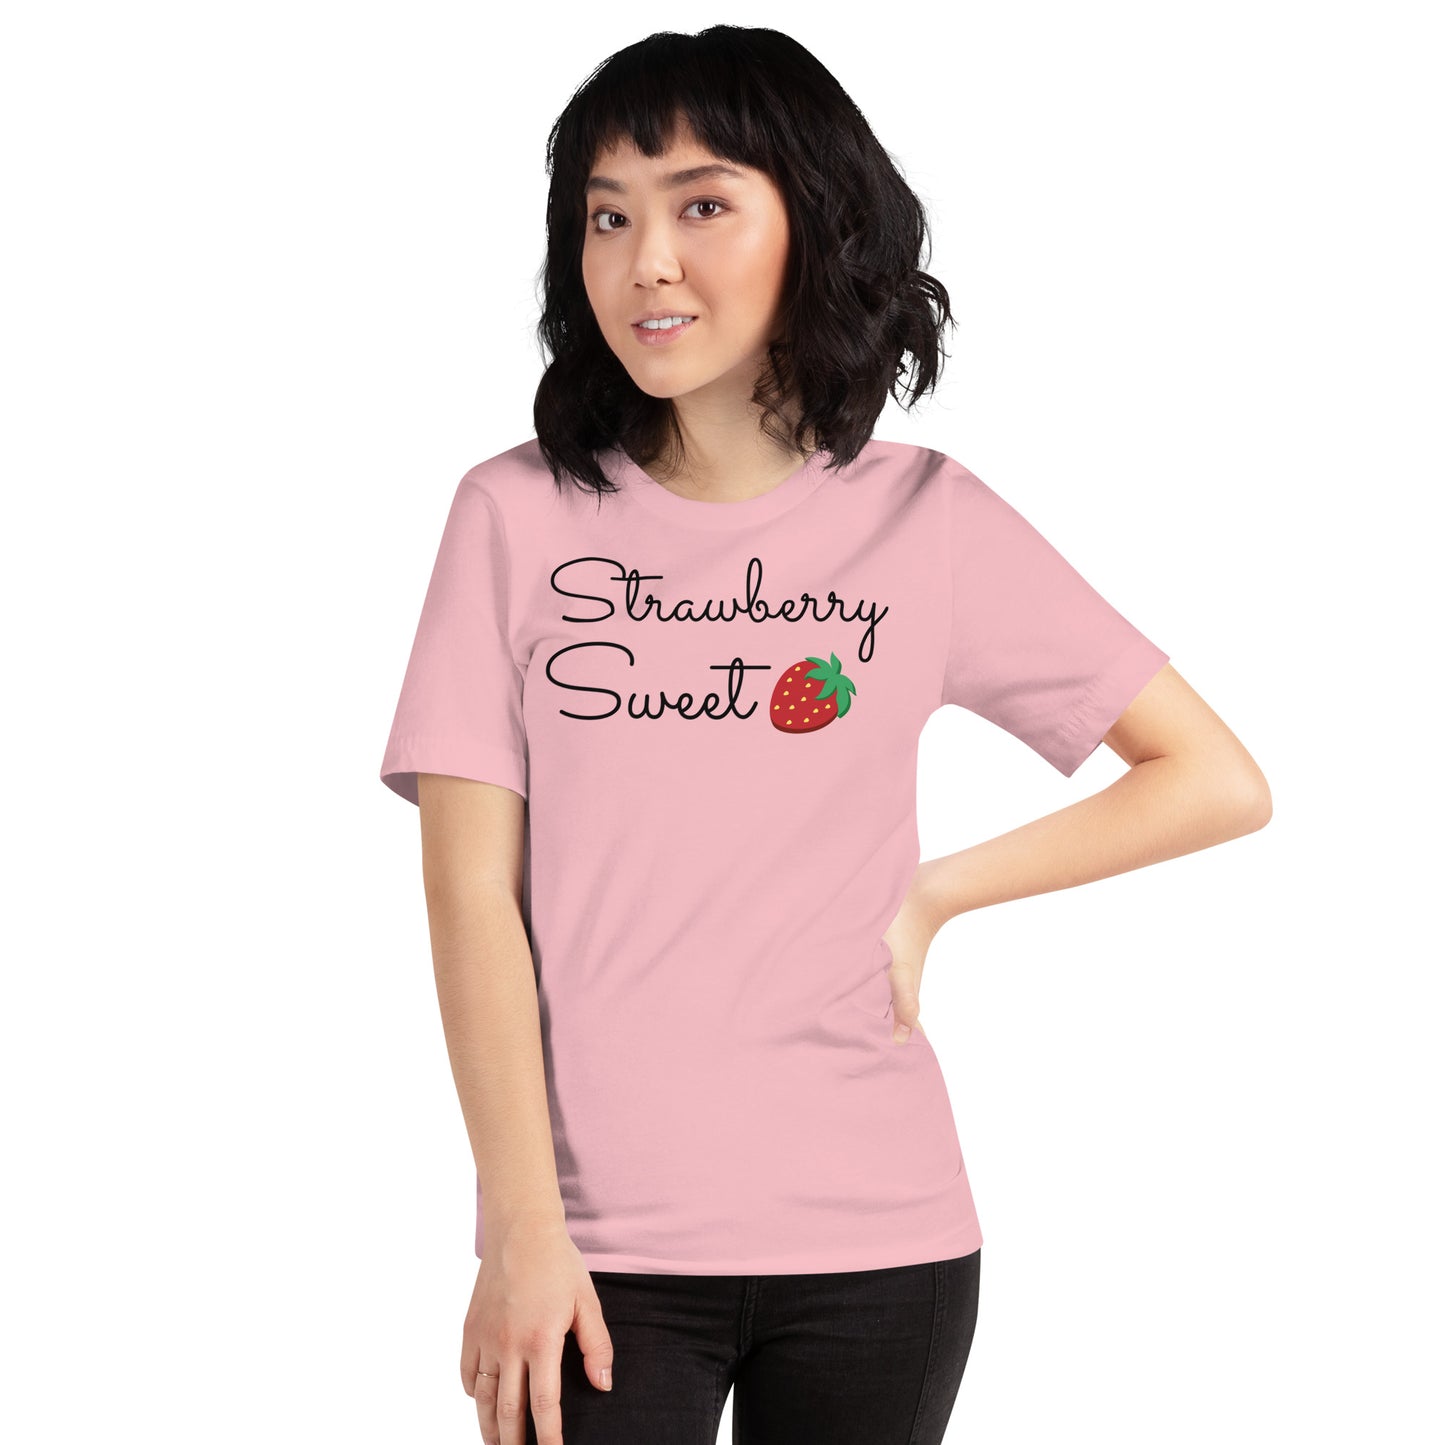 Strawberry Sweet t-shirt